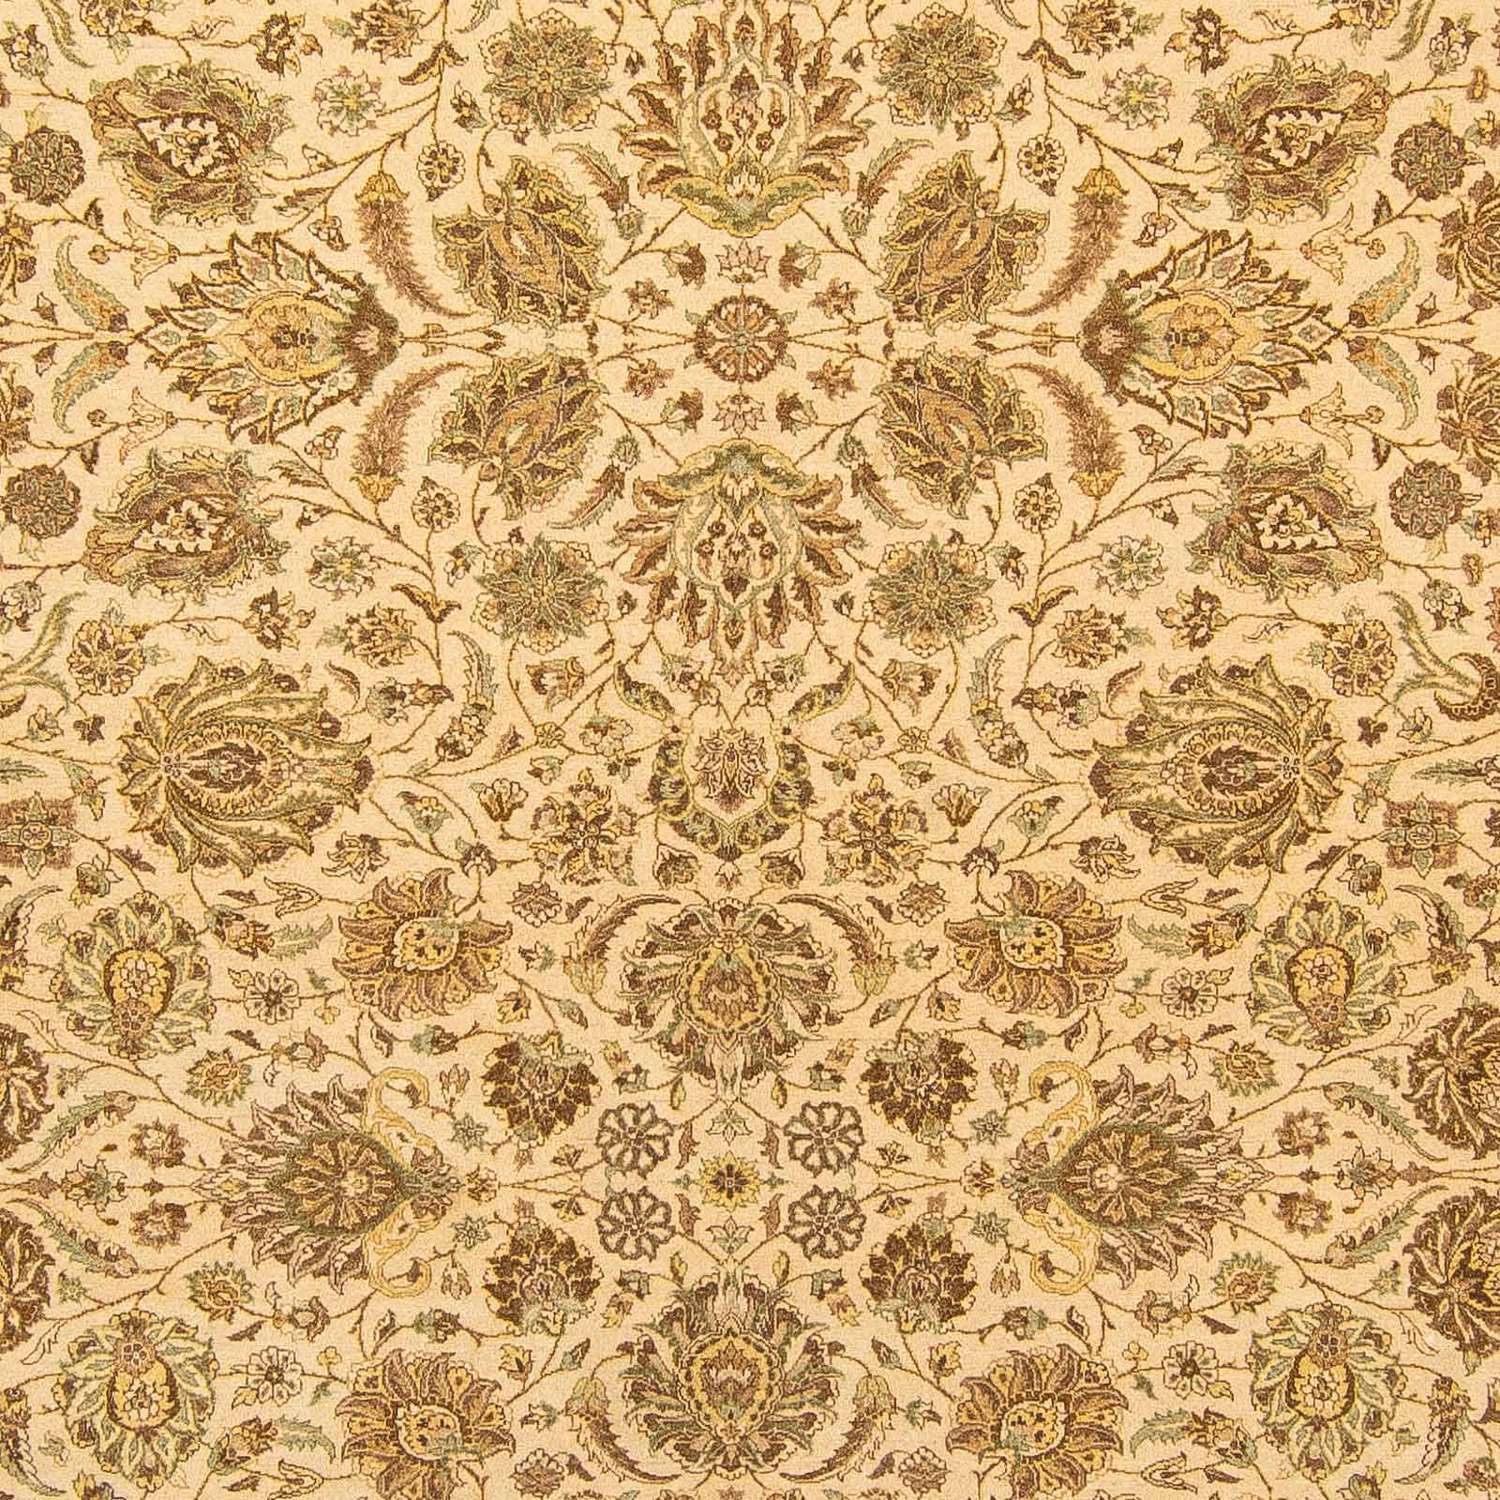 Ziegler Carpet - 368 x 277 cm - brun